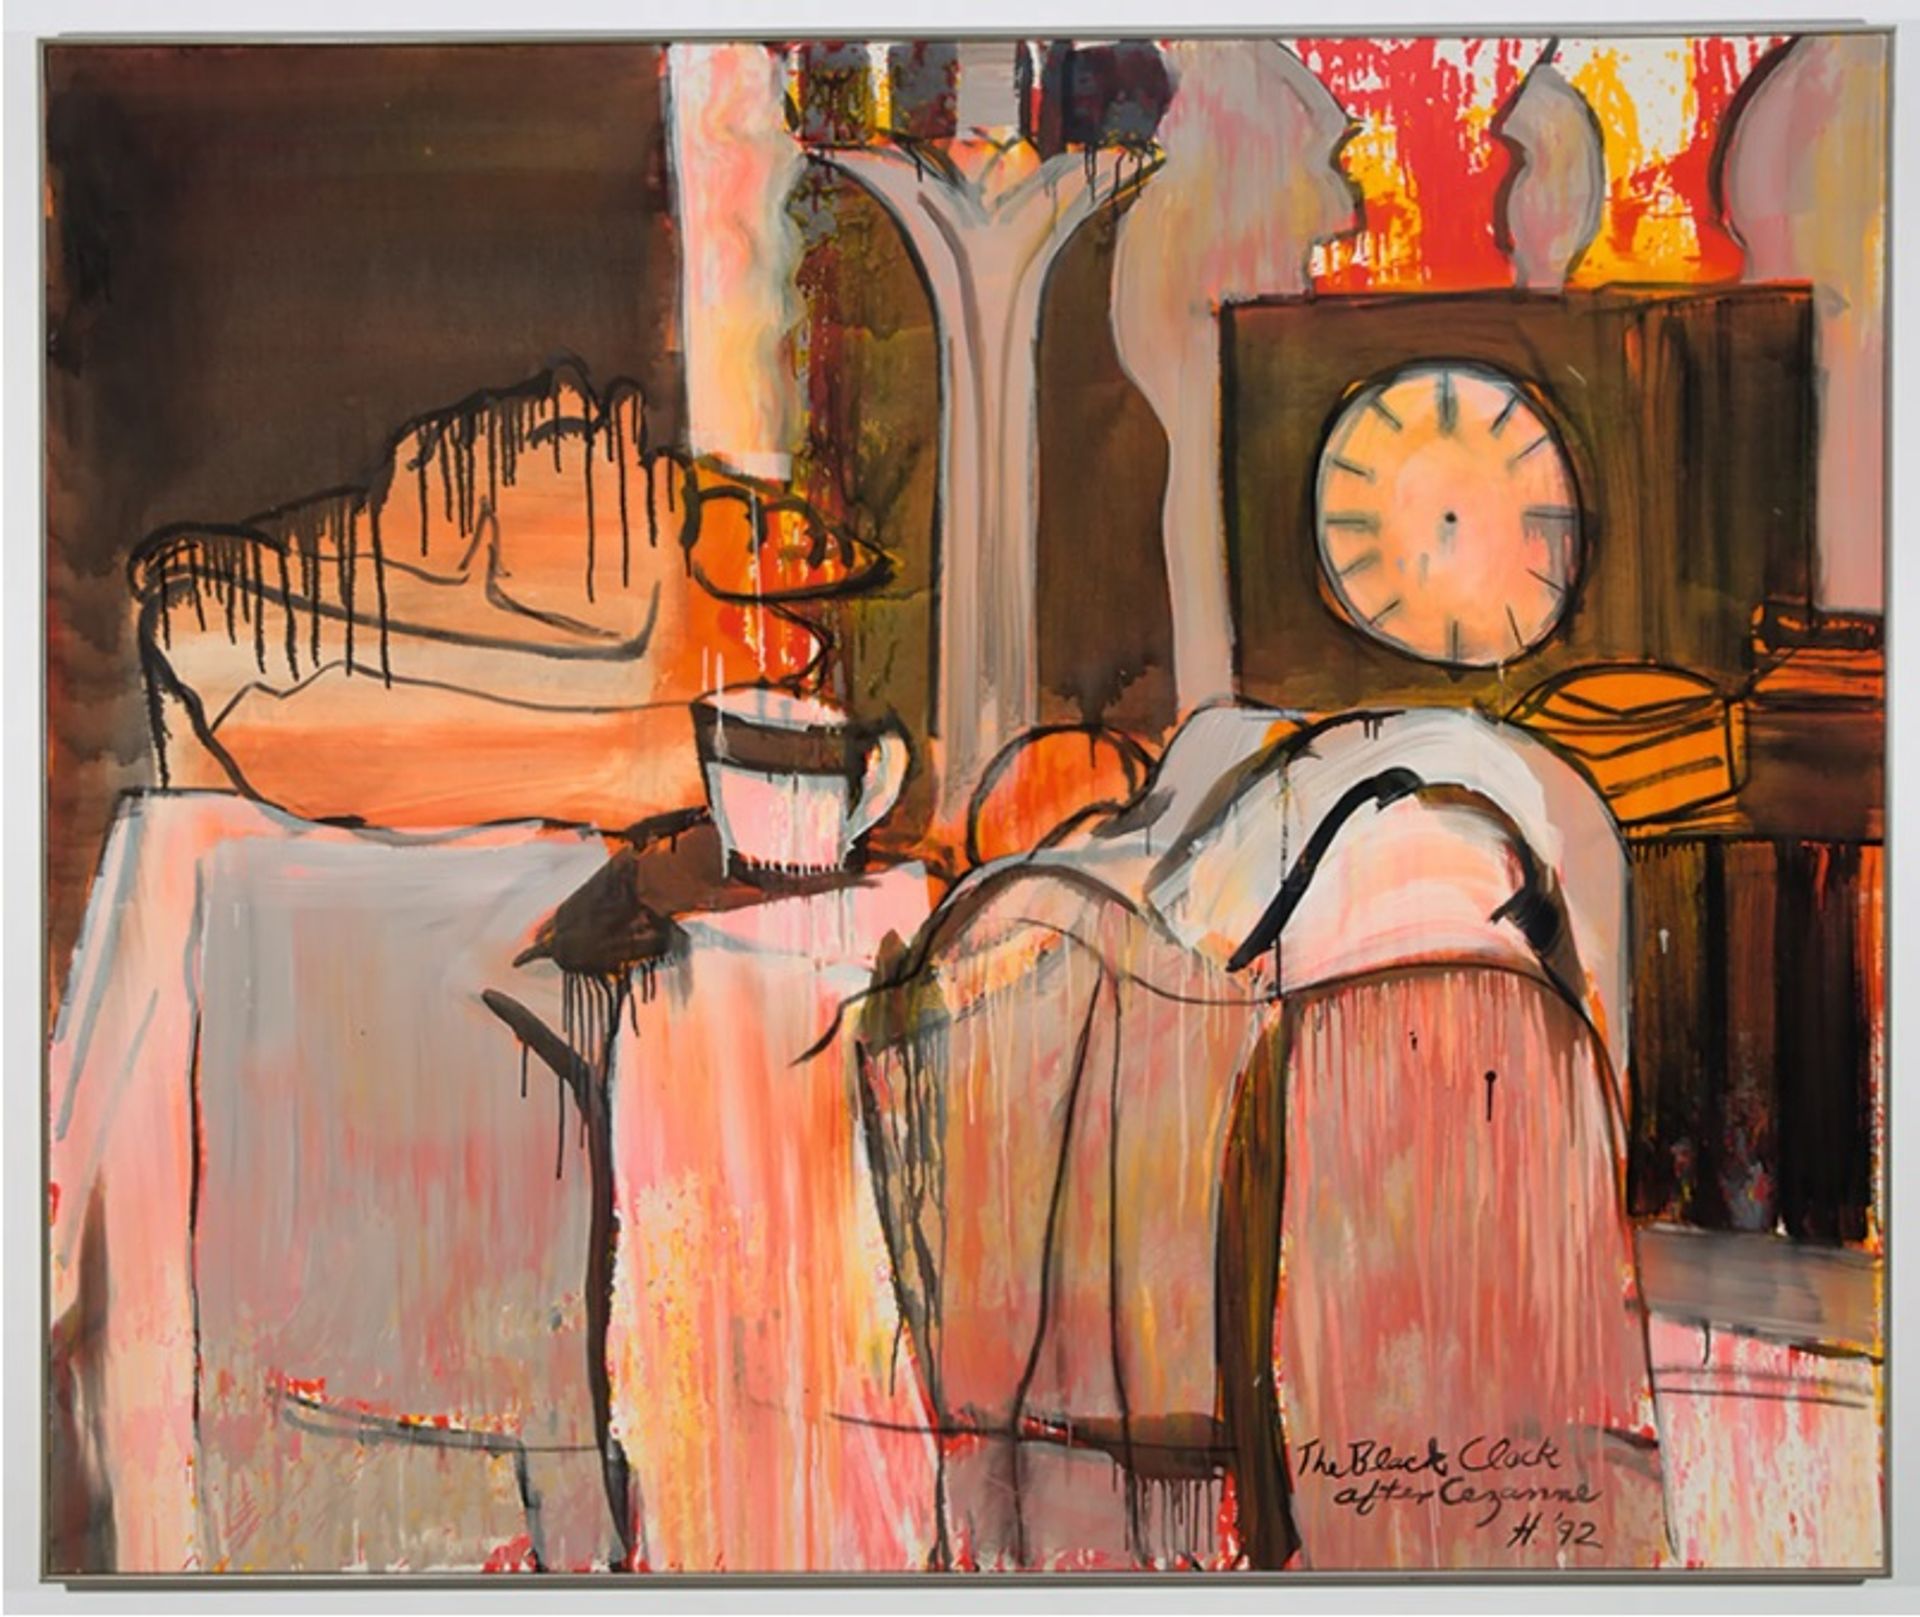 Black Clock (After Cezanne) (1992) של גרייס הרטיגן

באדיבות אחוזת גרייס הארטיגן / גלריות ACA, ניו יורק